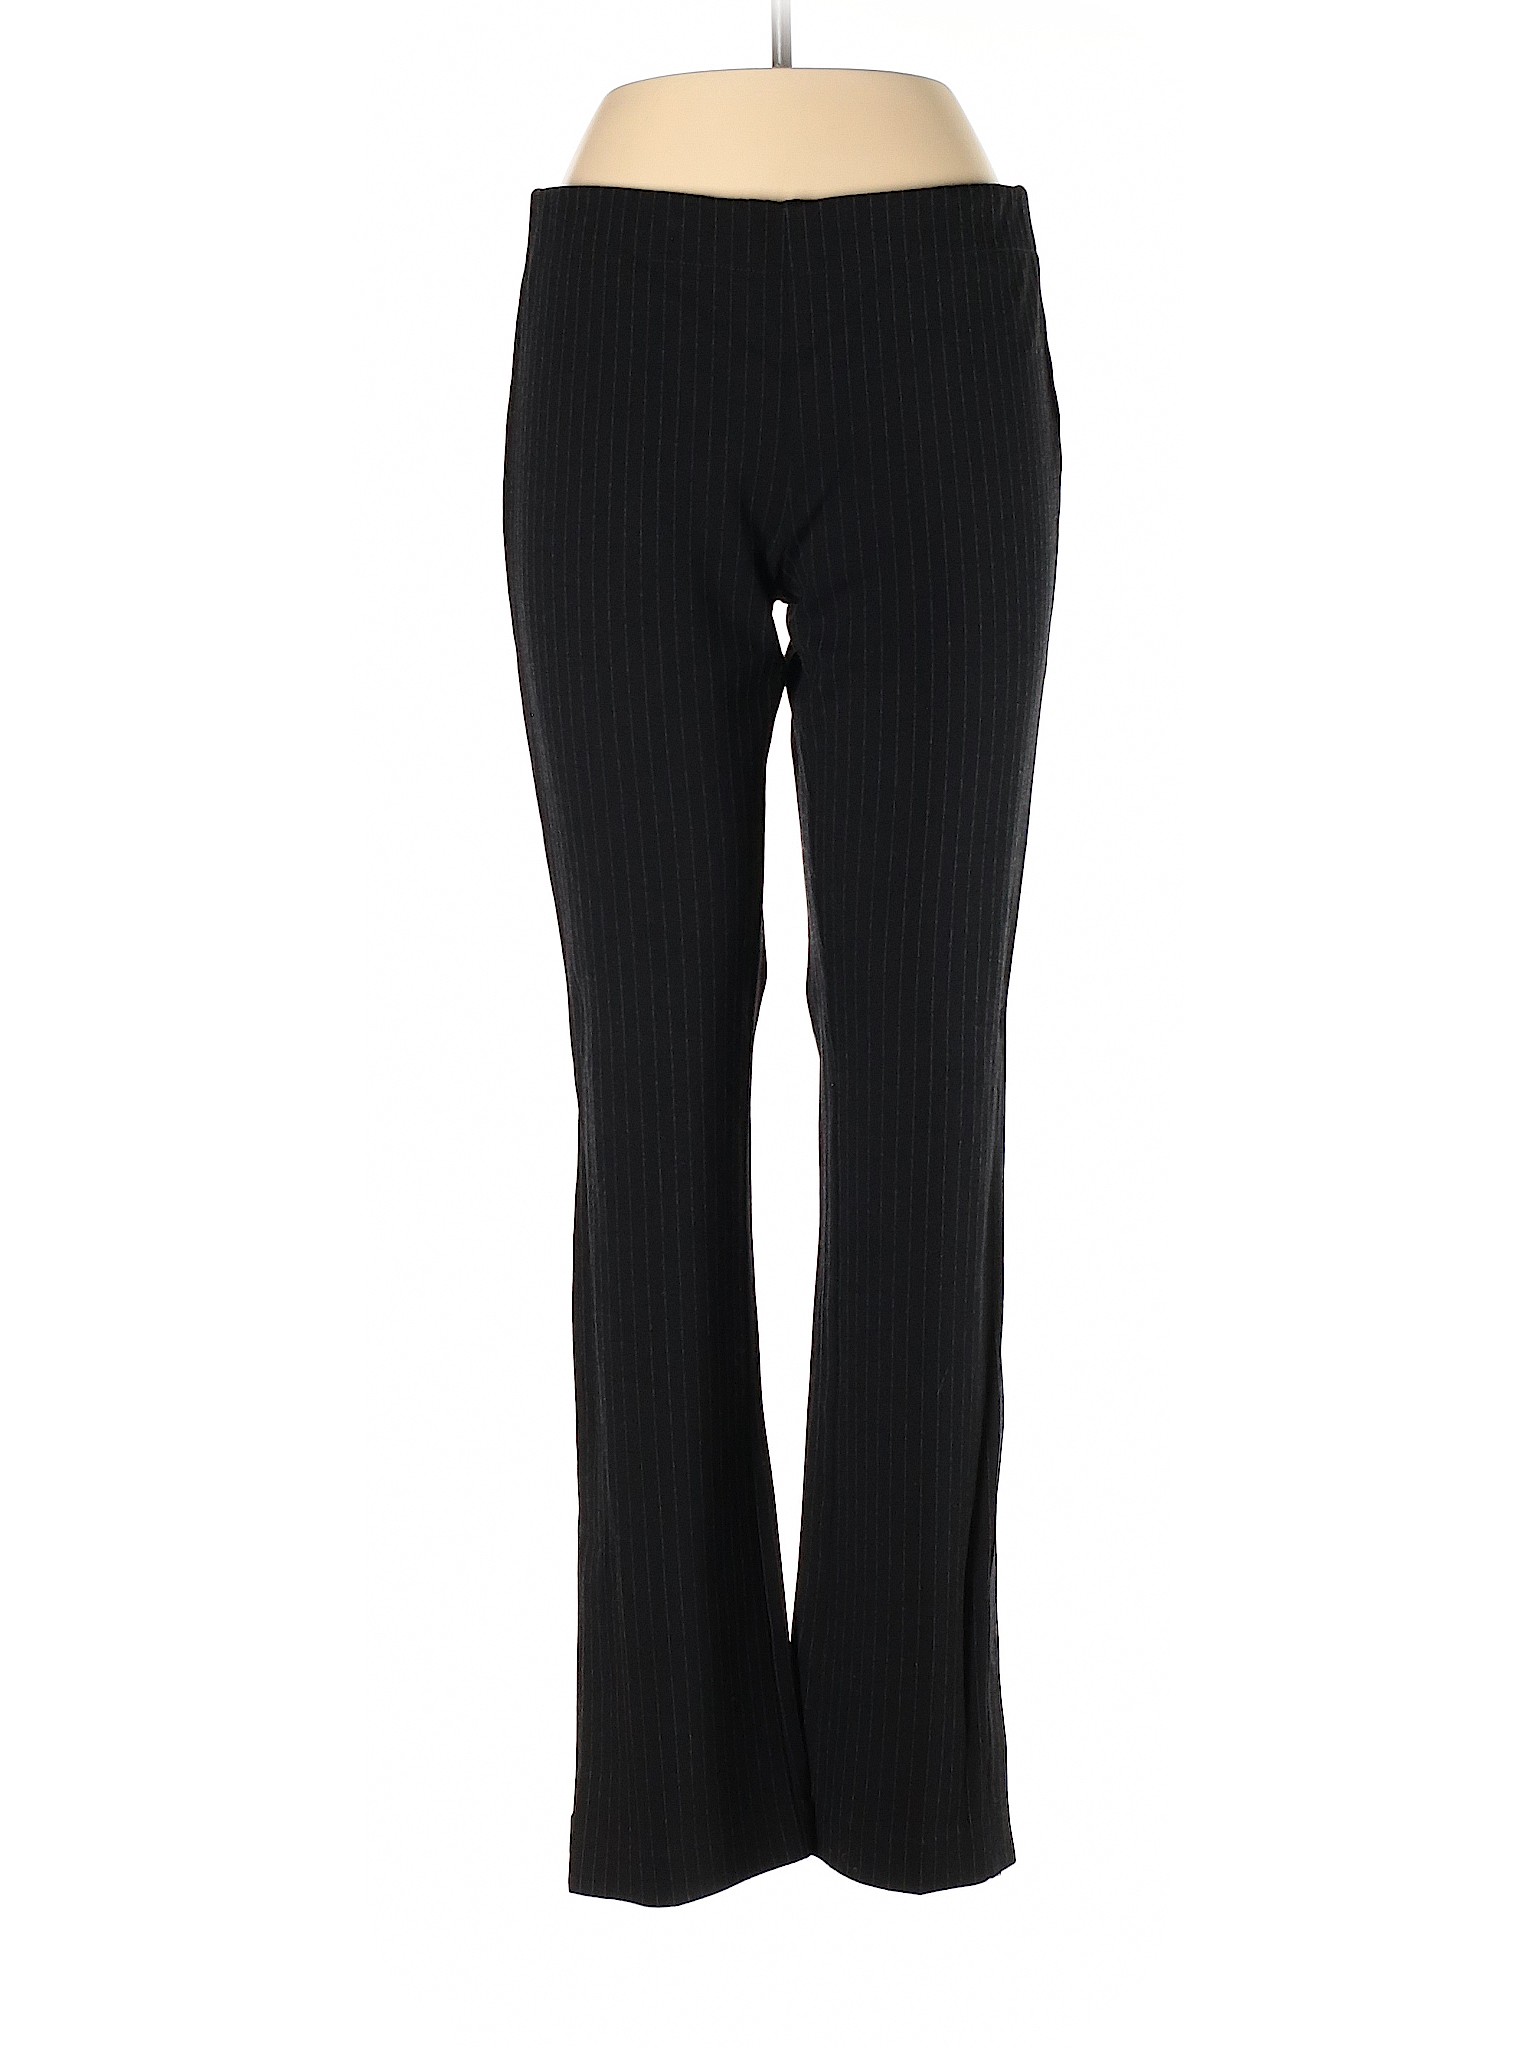 Ecru Women Black Dress Pants M | eBay